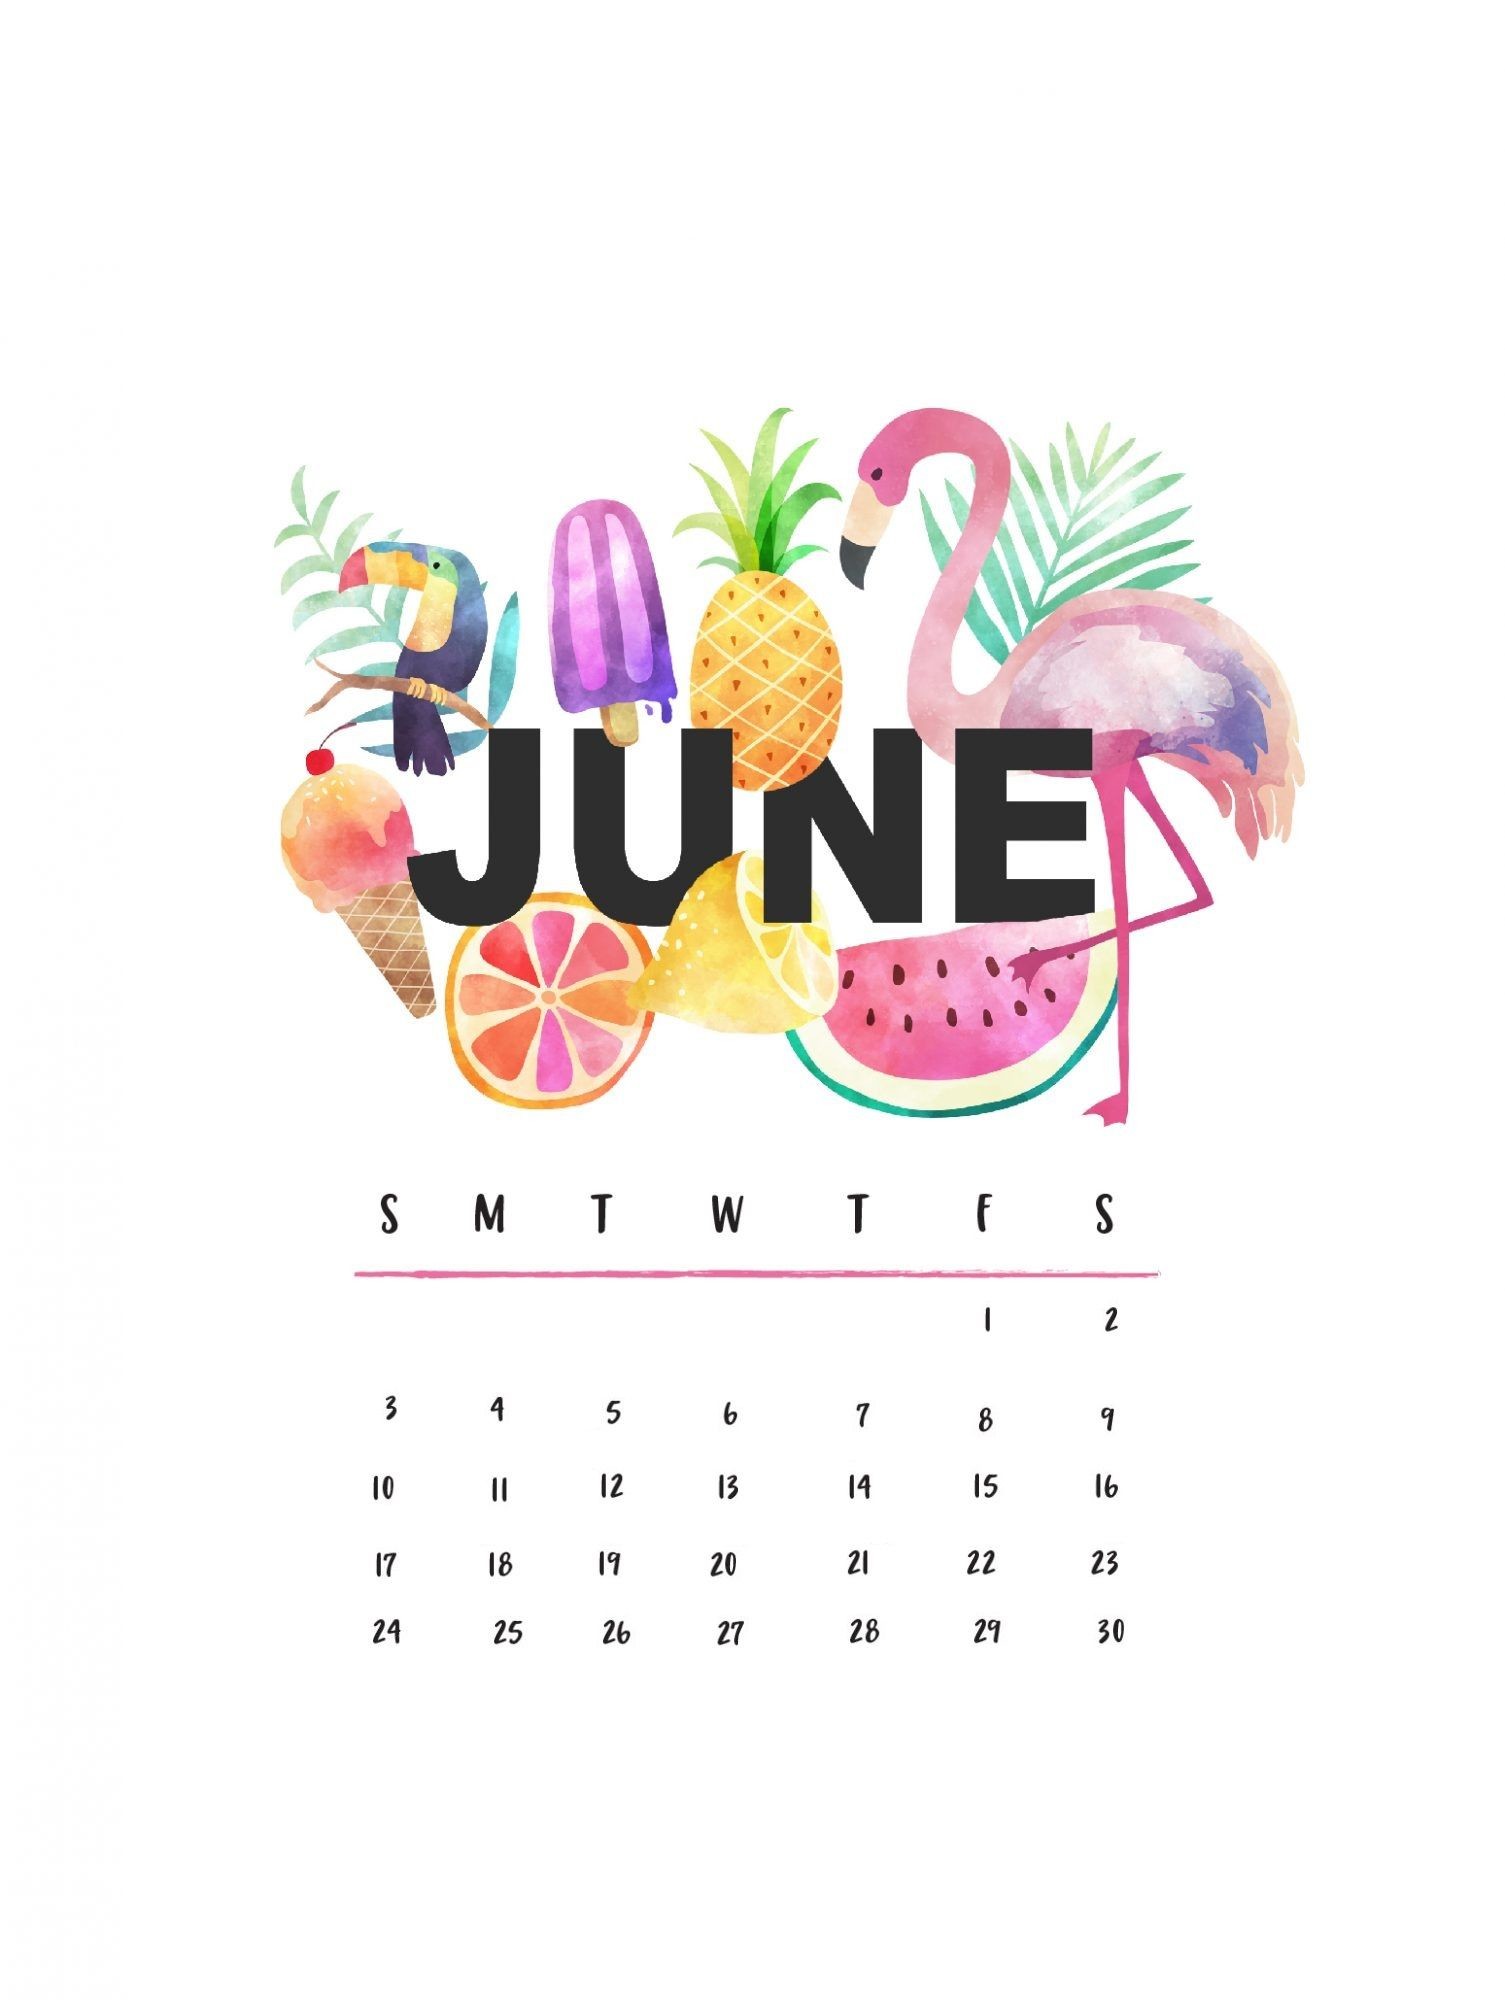 1505x2000 Beautiful June 2018 iPhone Calendar Wallpapers